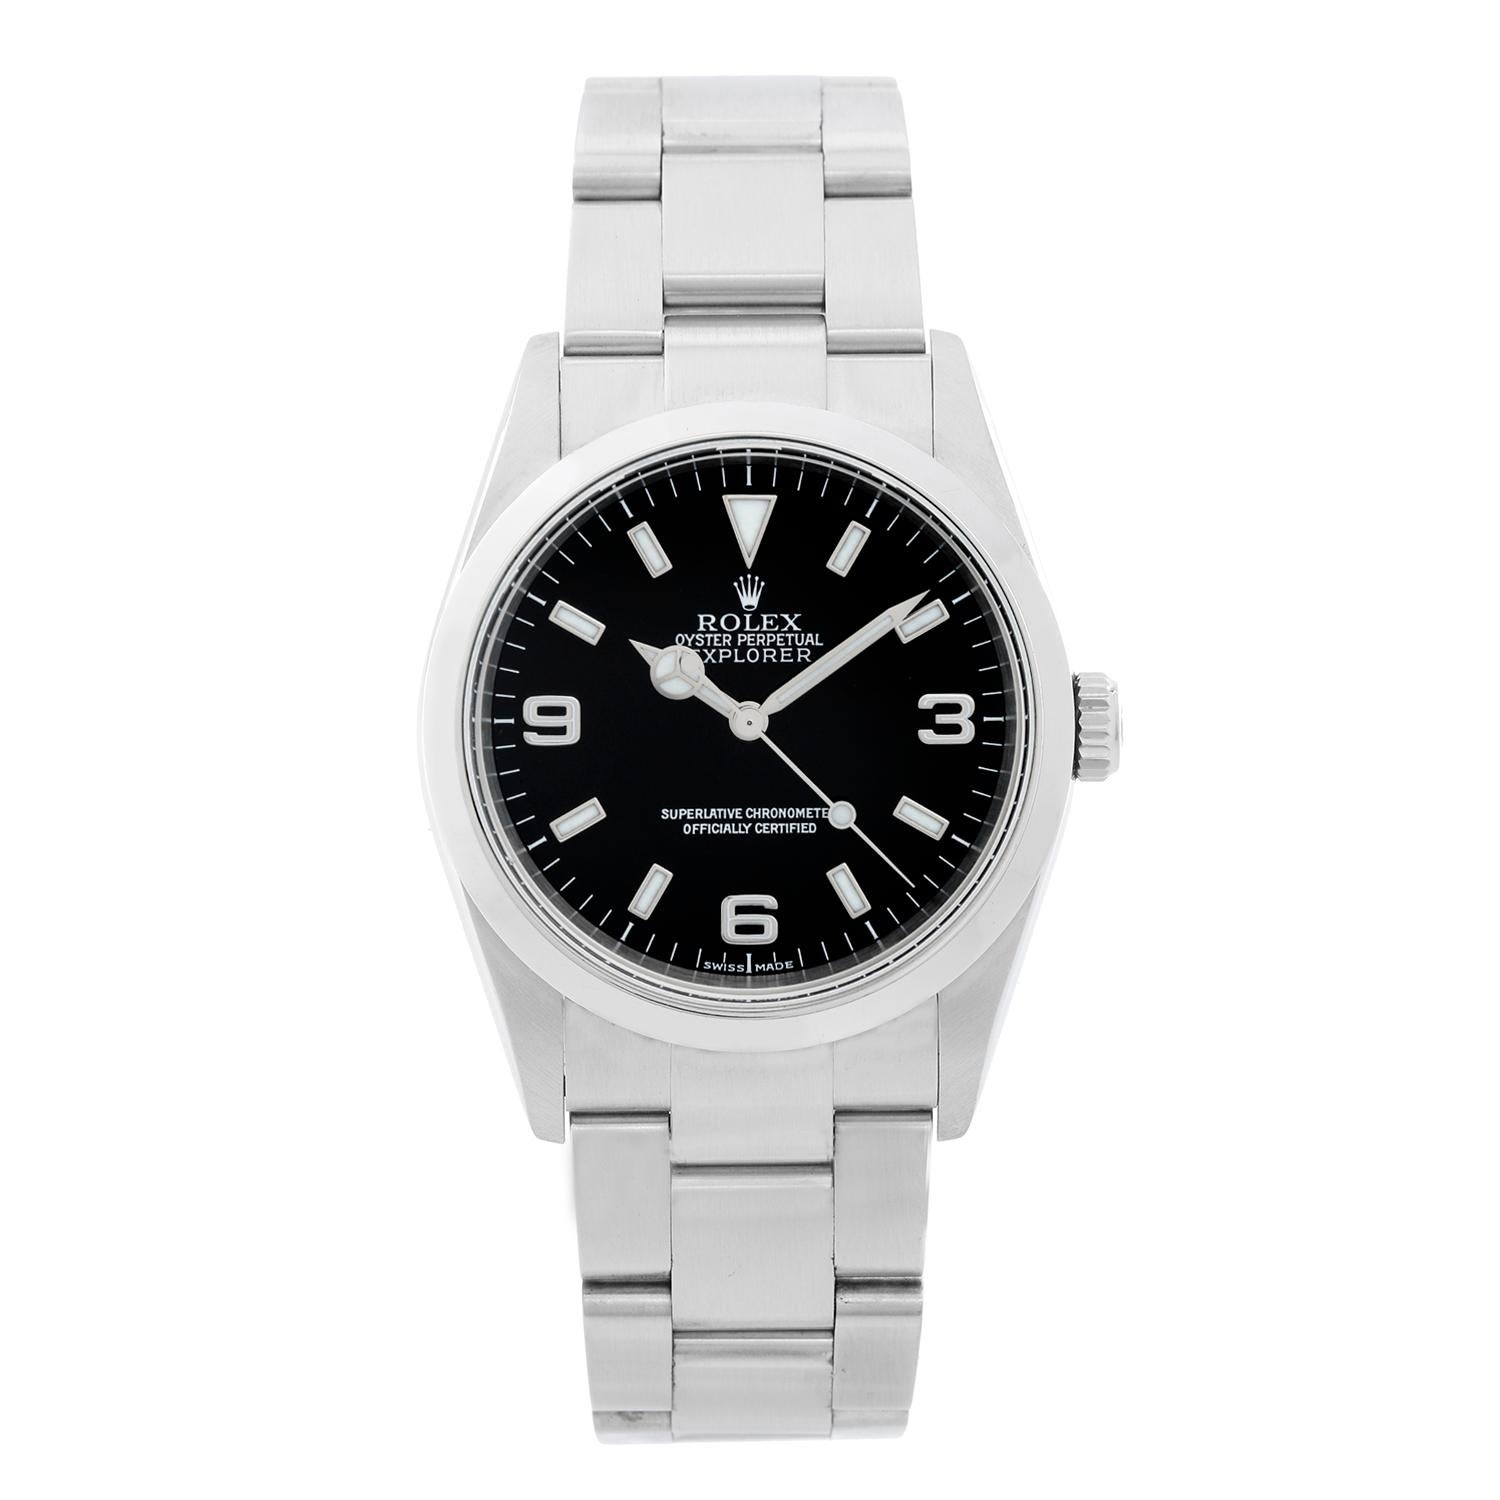 Rolex Explorer Men's Stainless Steel Watch 114270